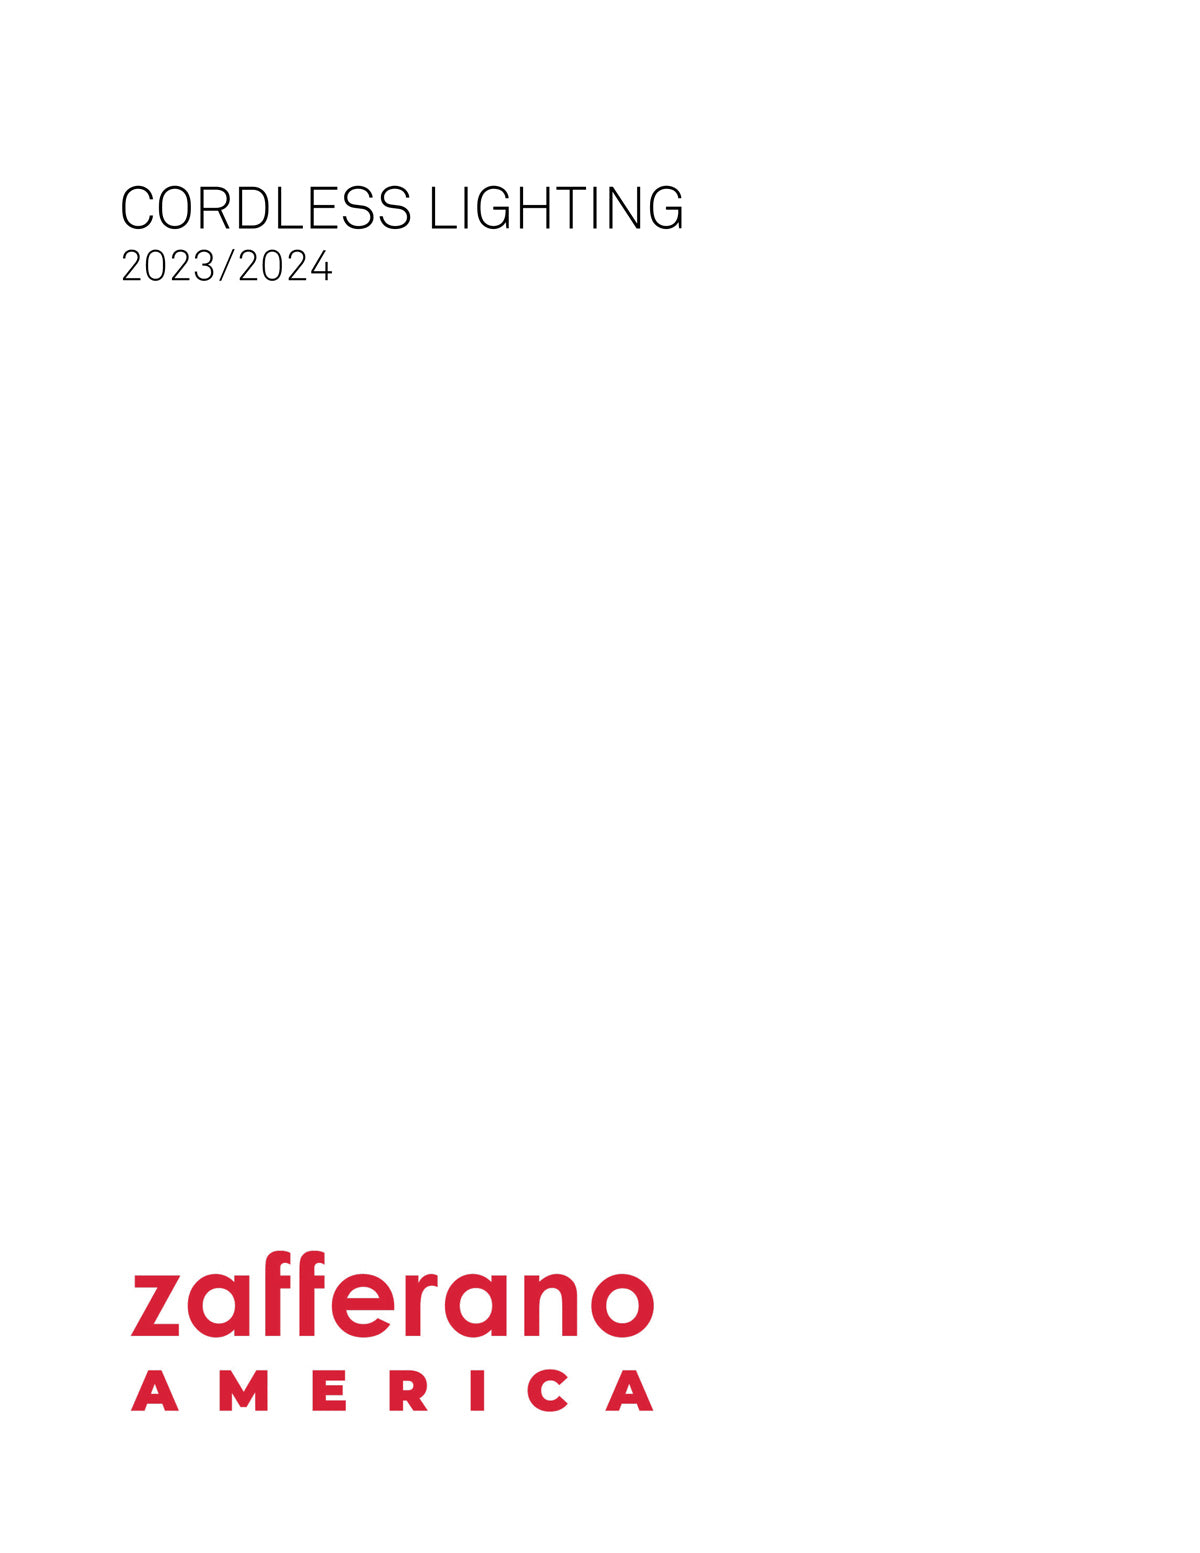 Zafferano America Cordless Lighting 2023